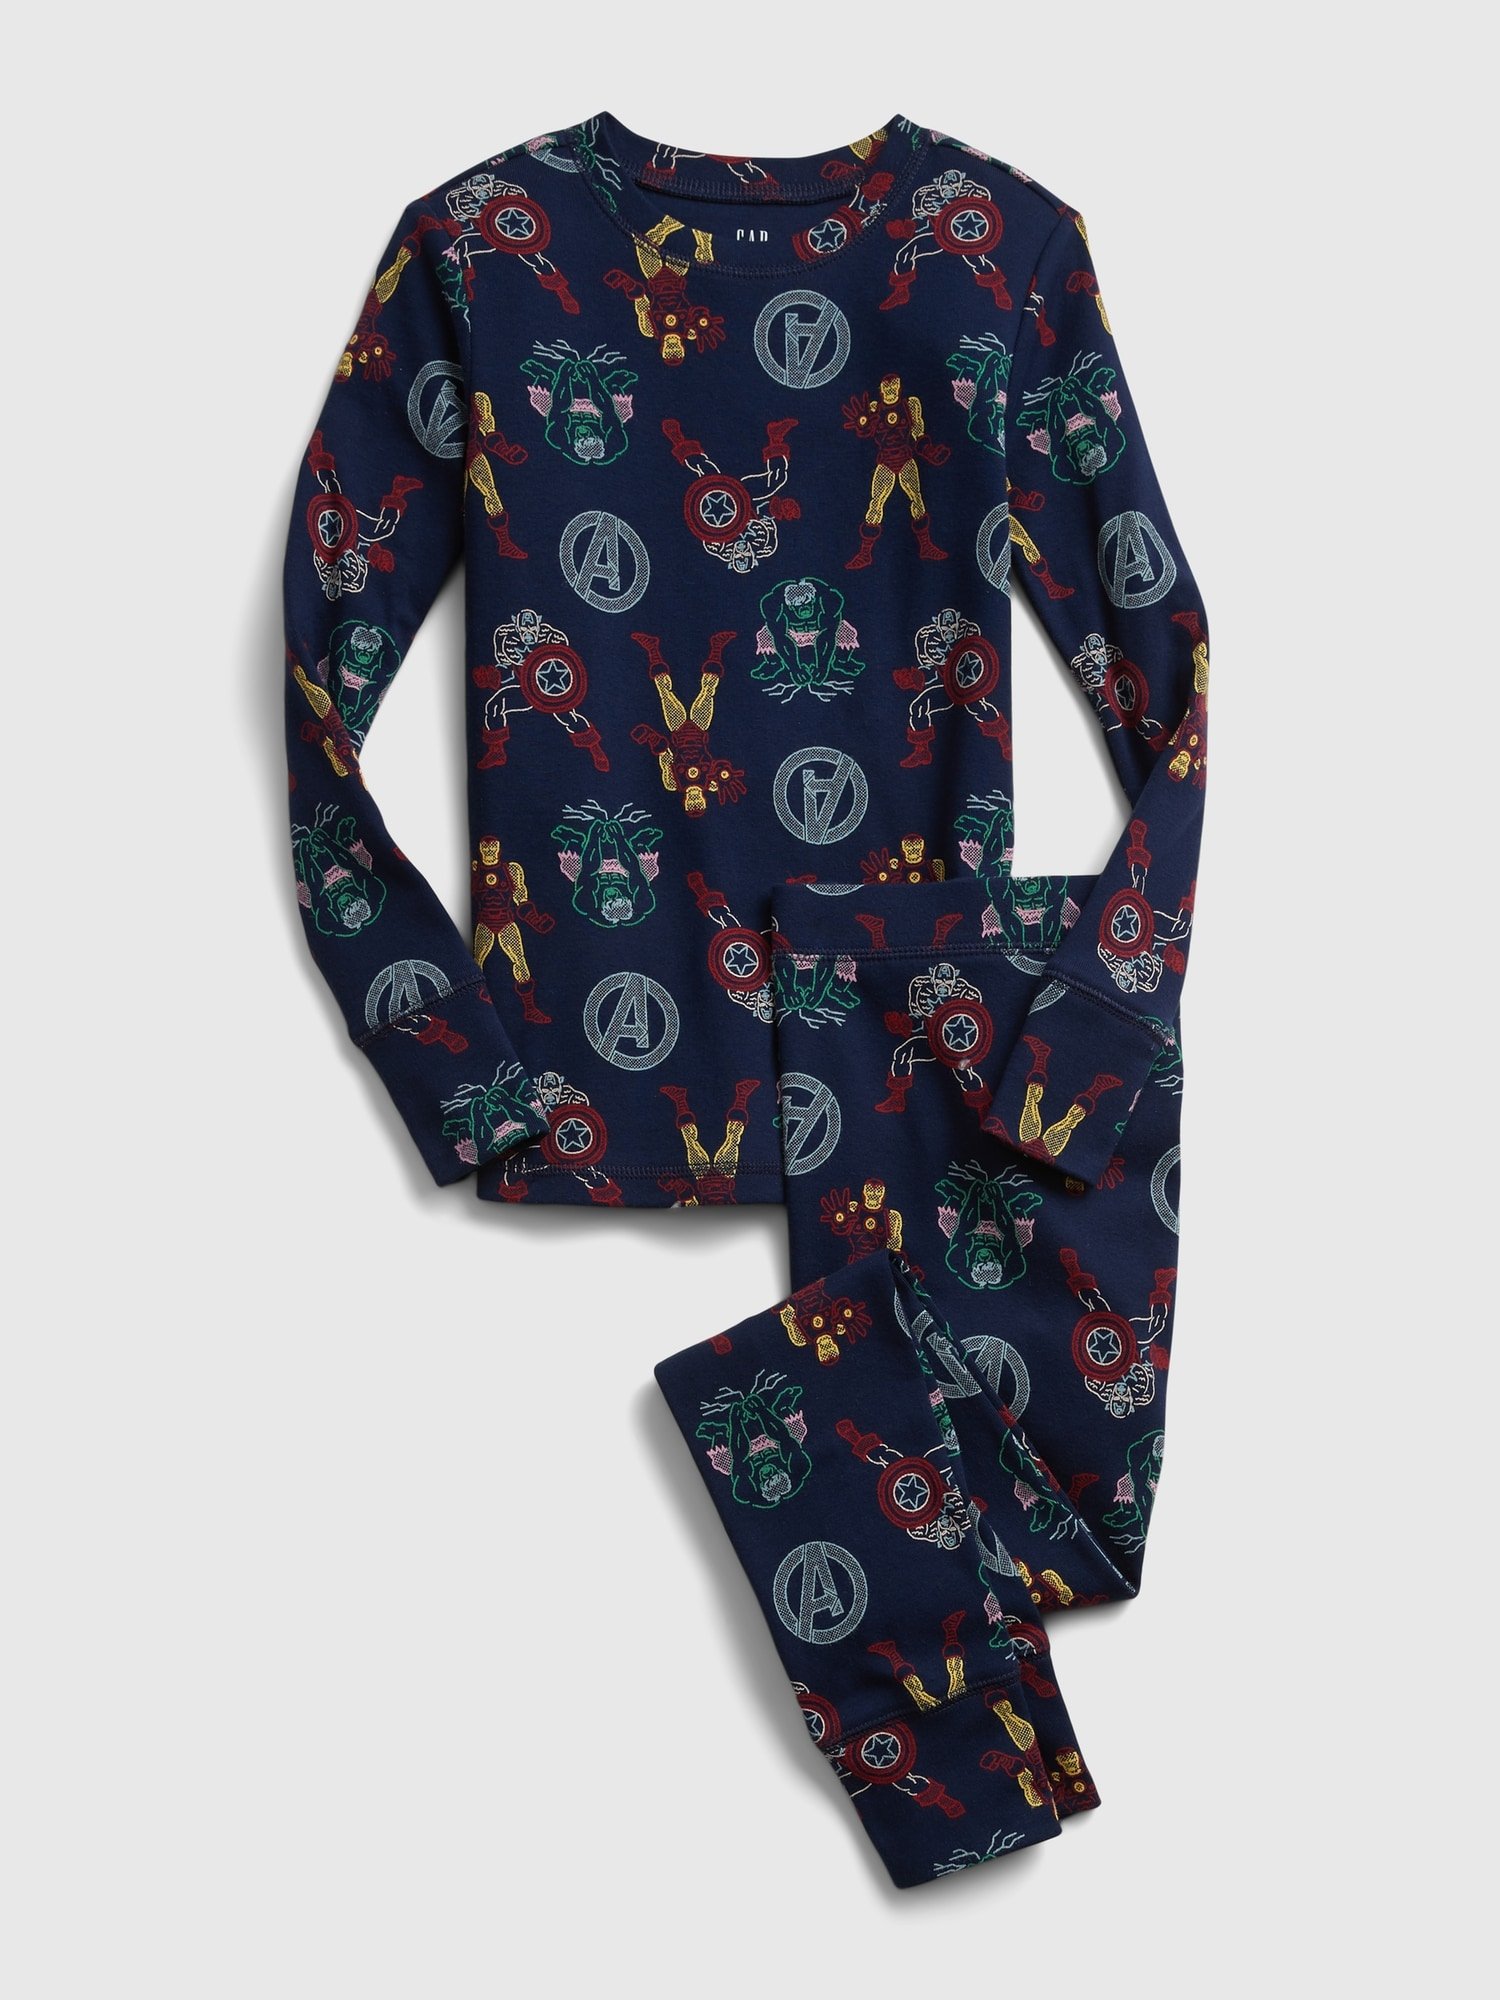 Marvel Avengers Pijama Takımı product image